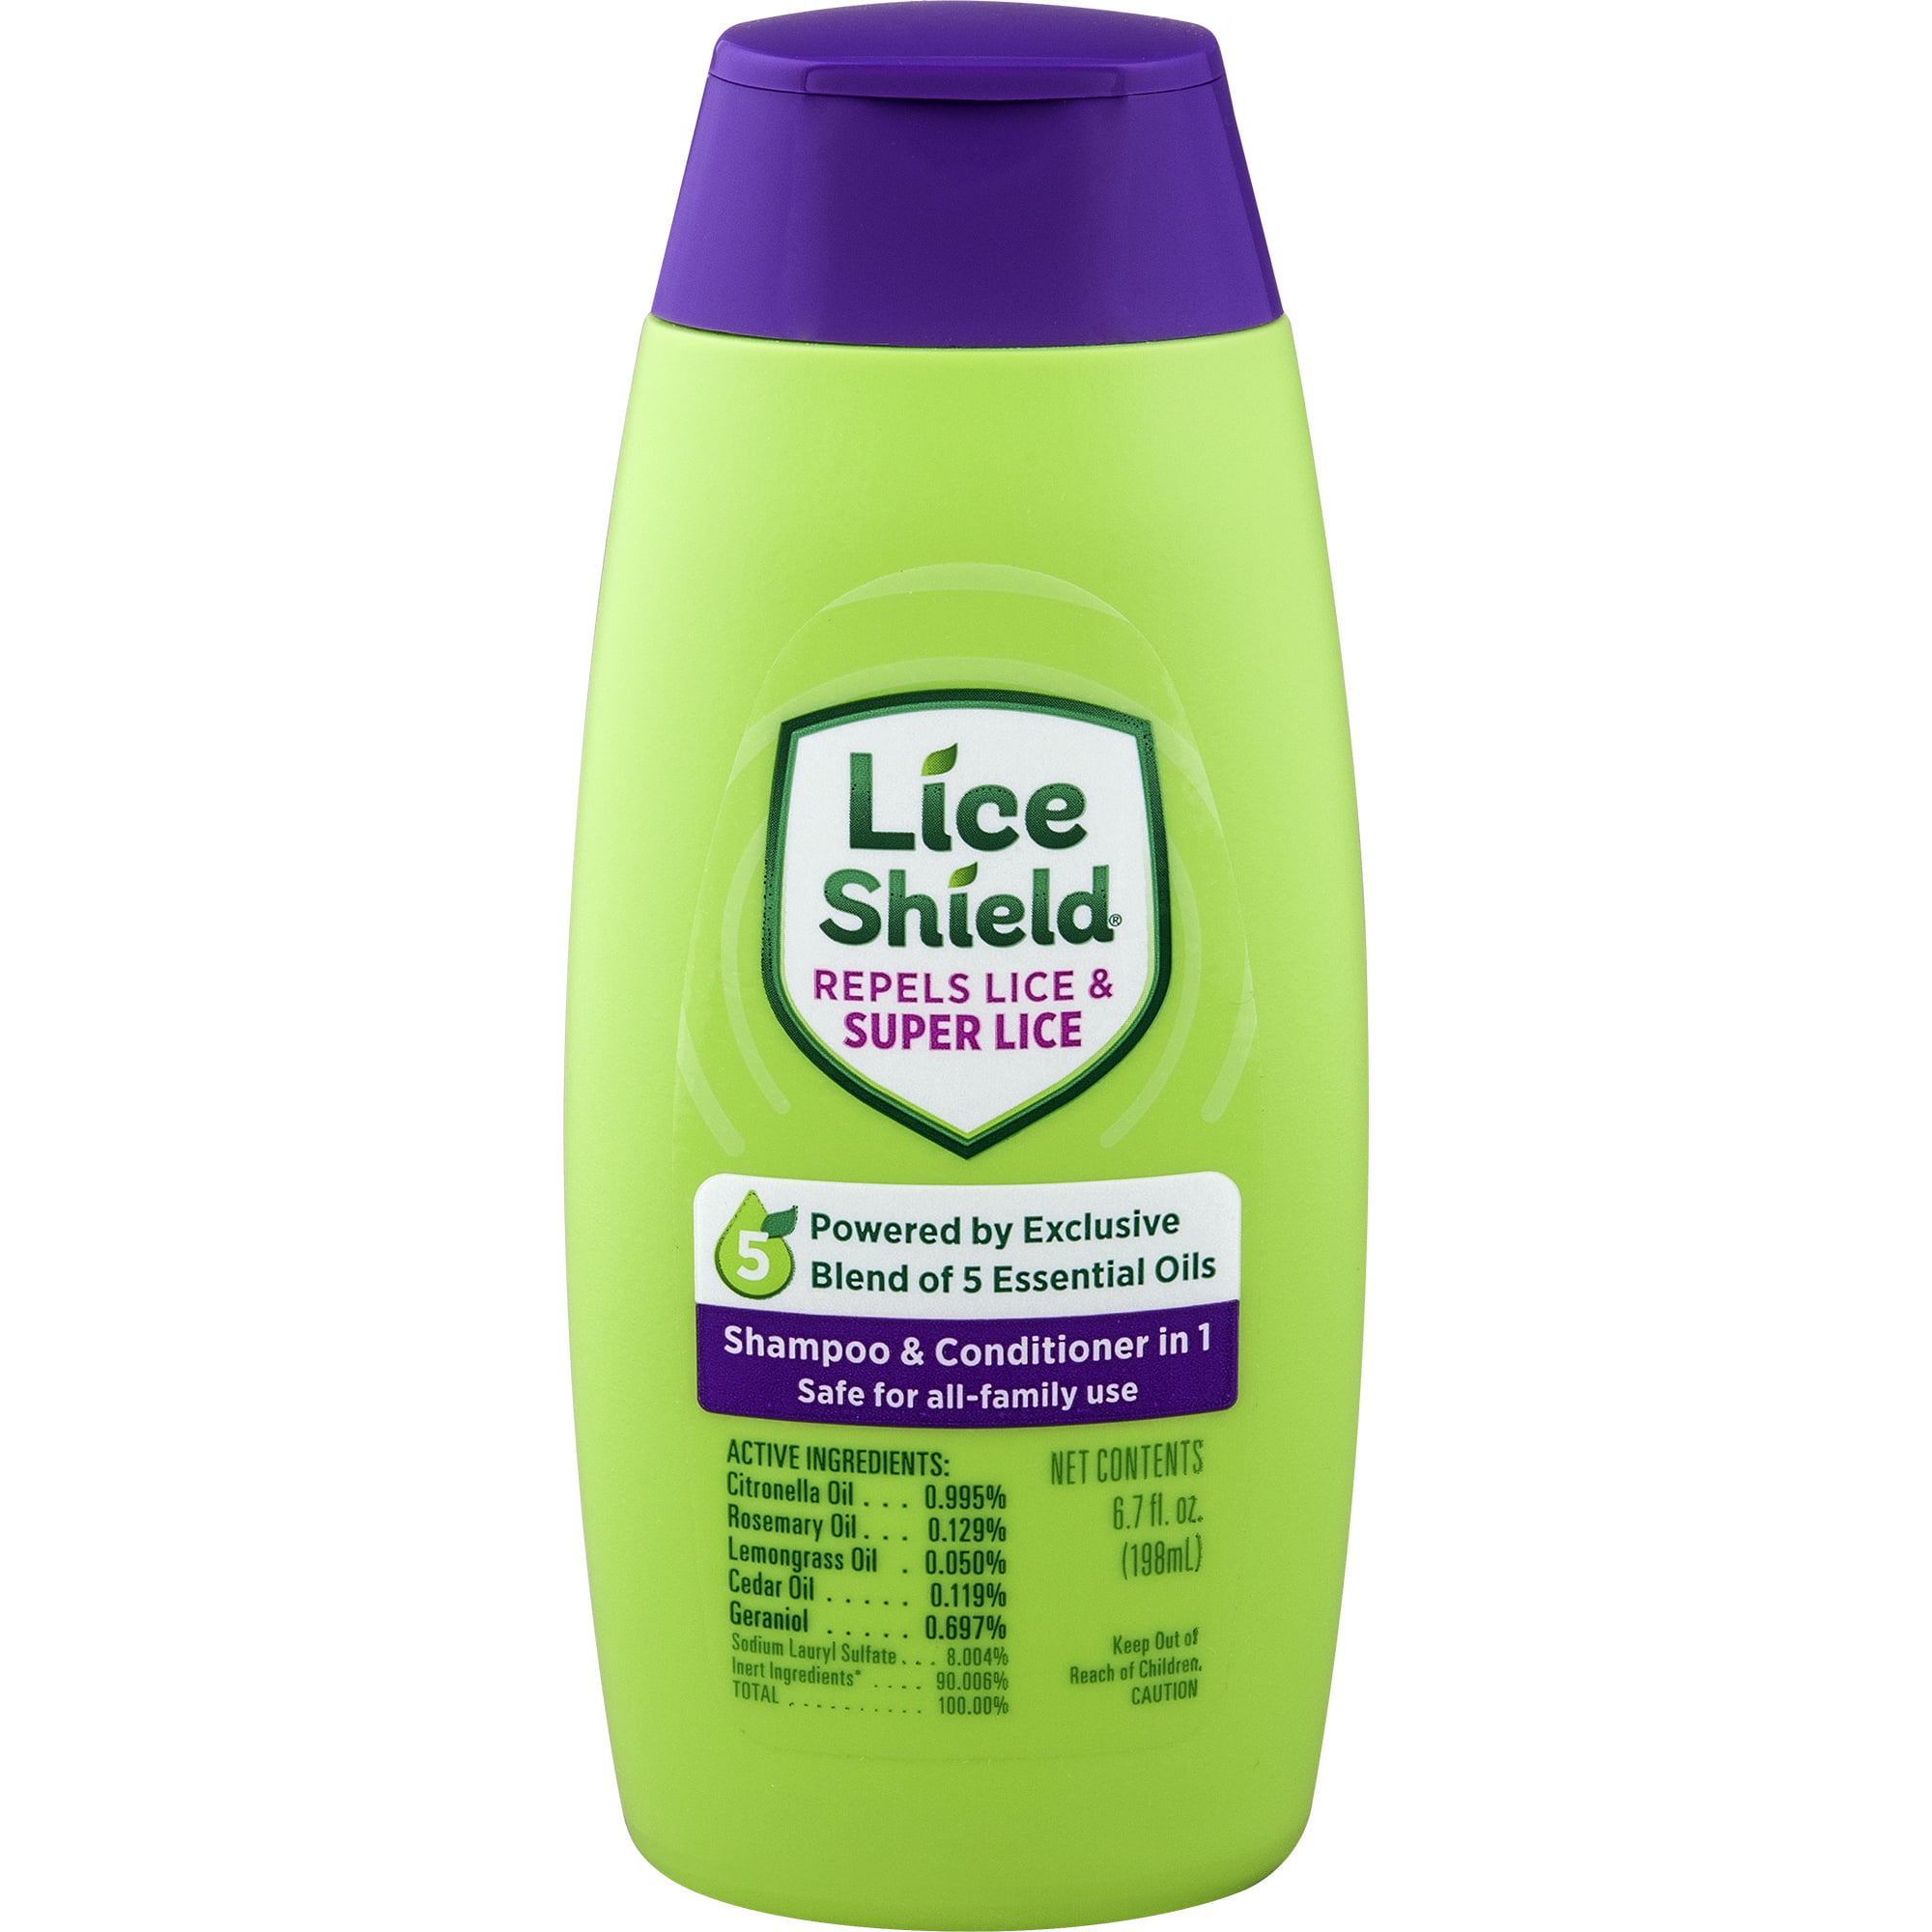 Body lice shampoo